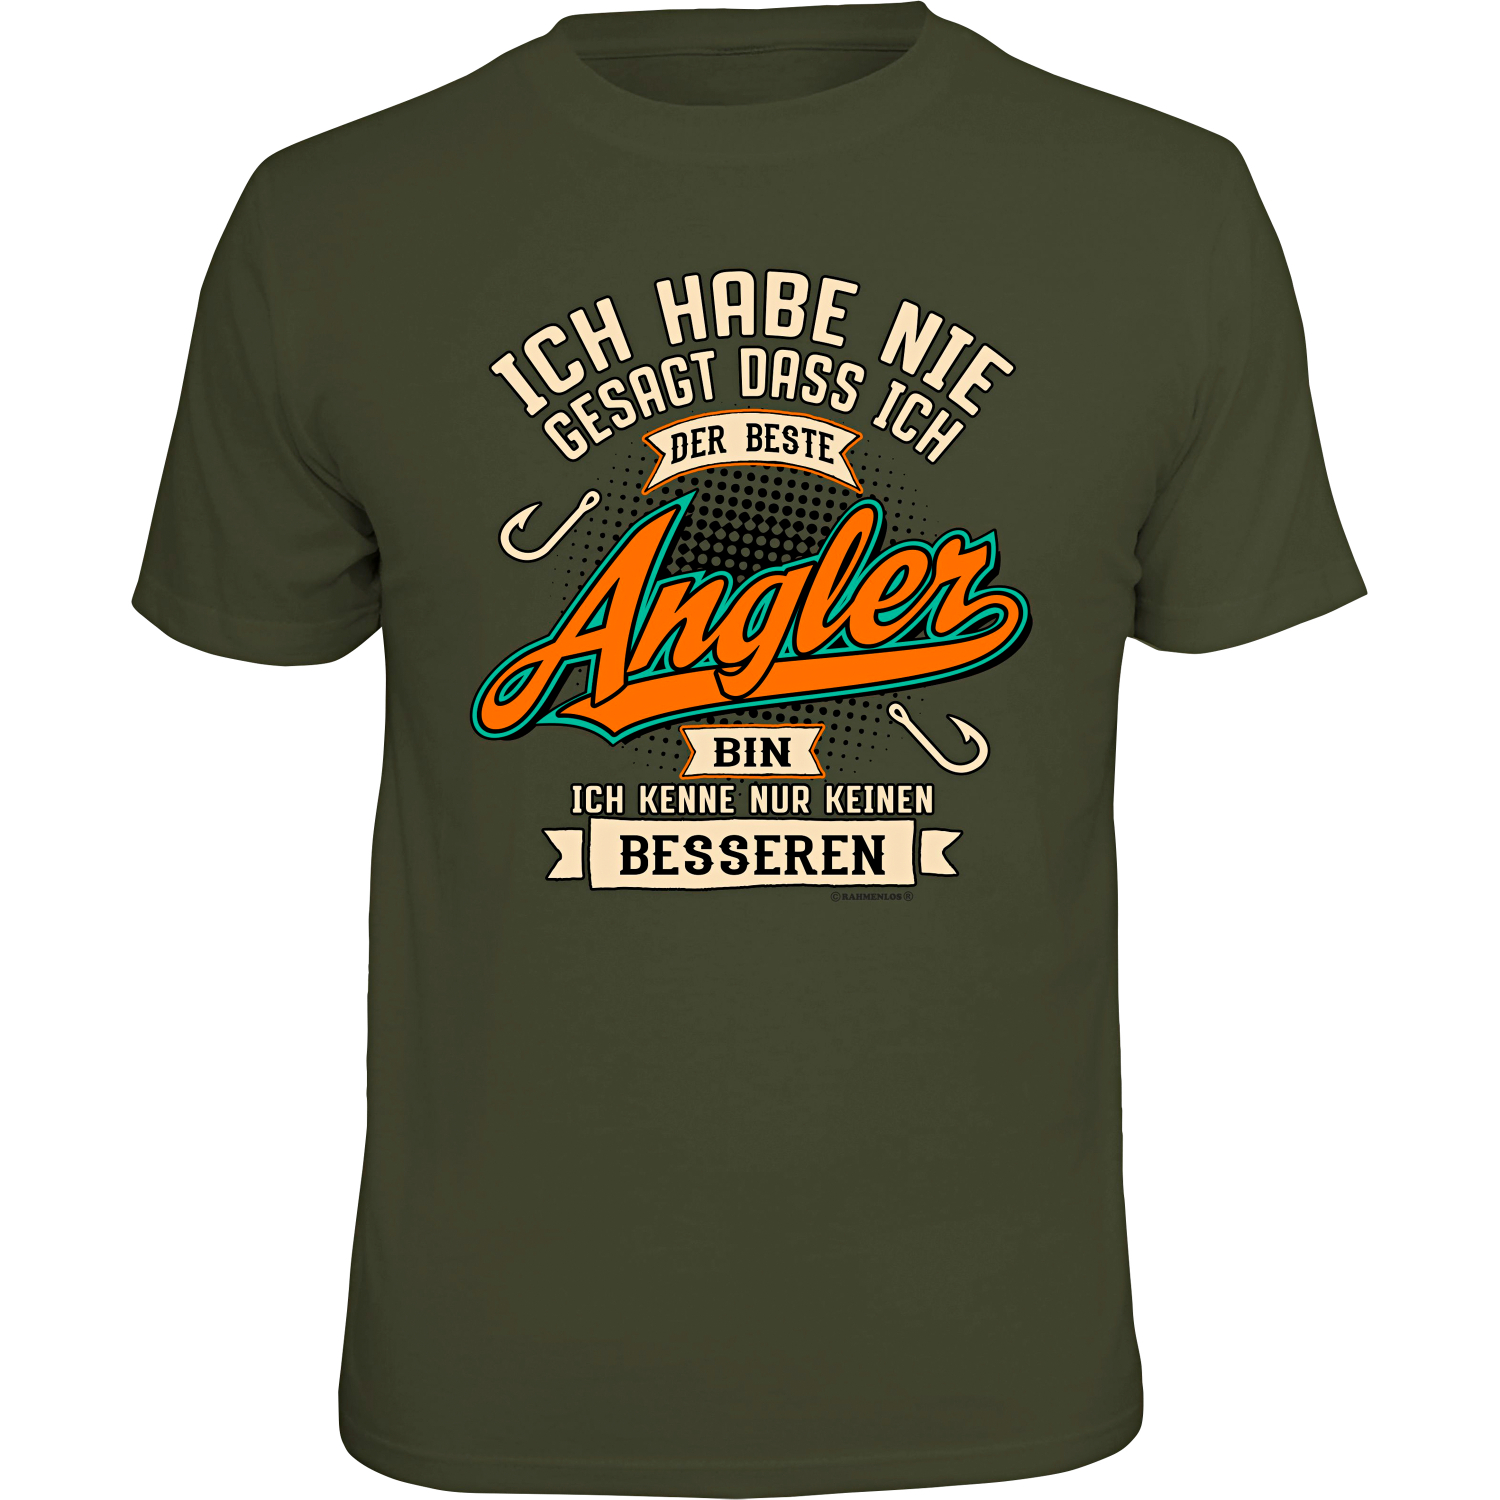 Rahmenlos Men's T-Shirt I never said (German version only)